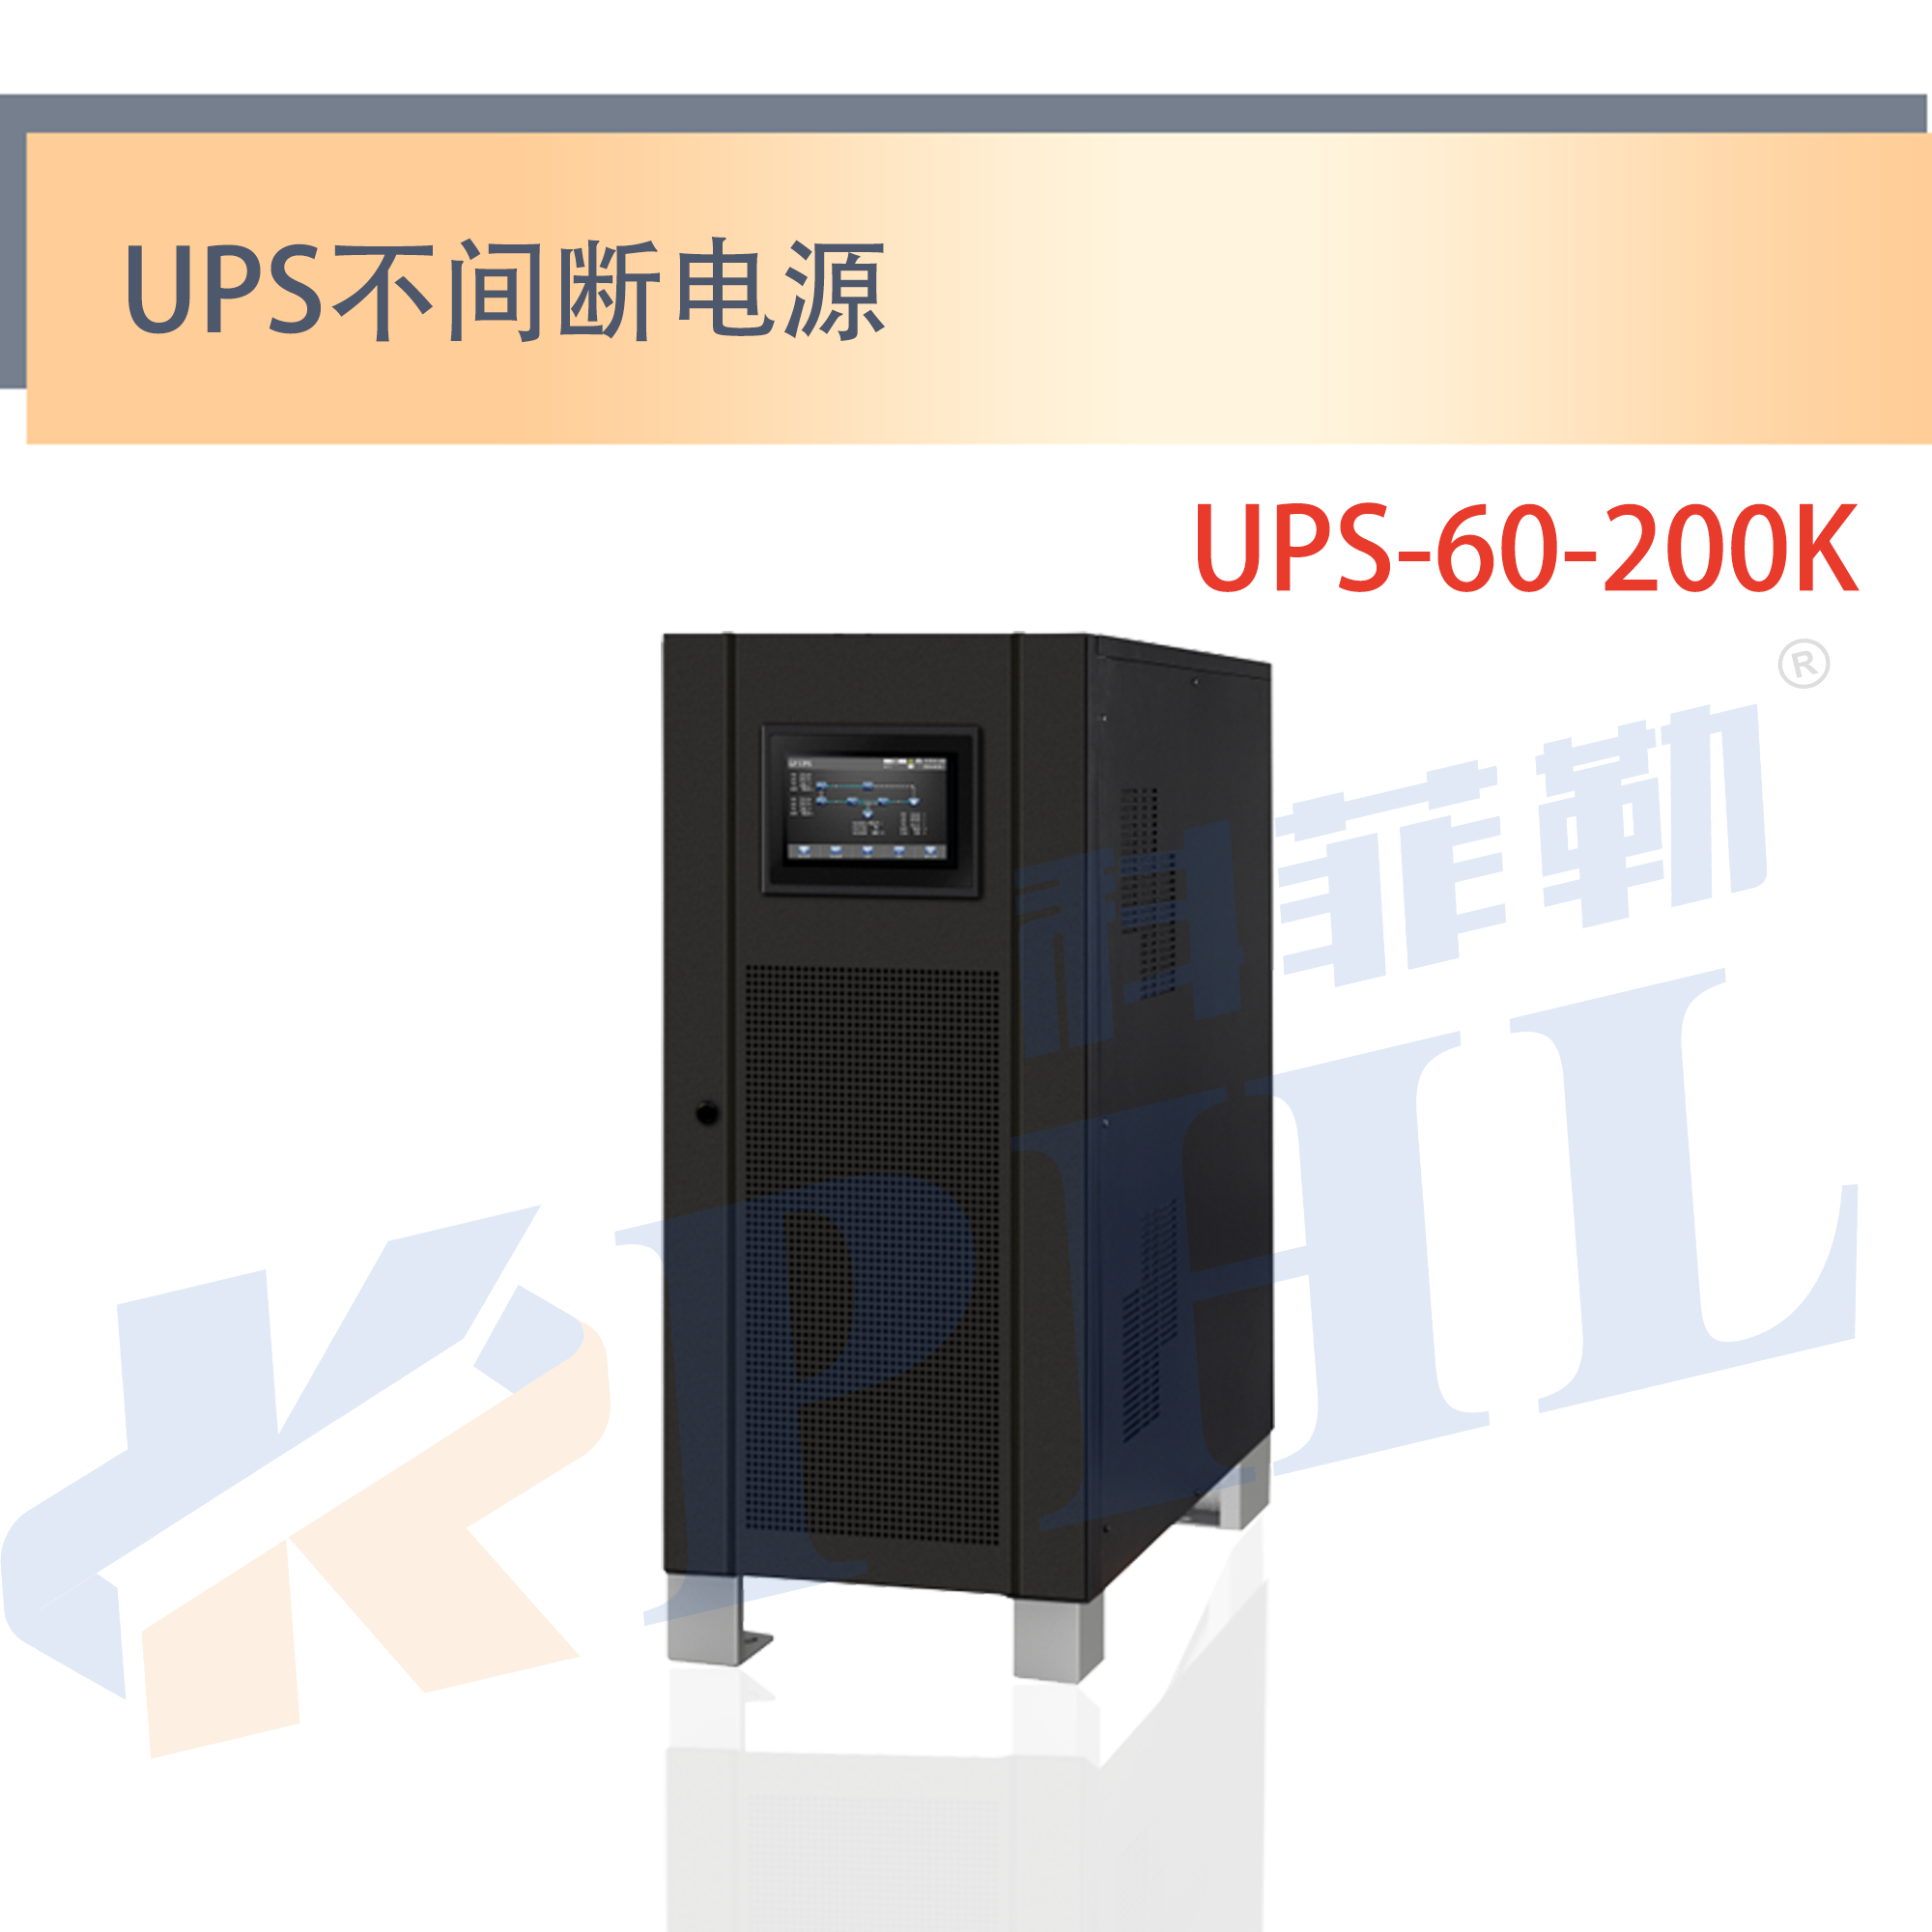 UPS-60-200K